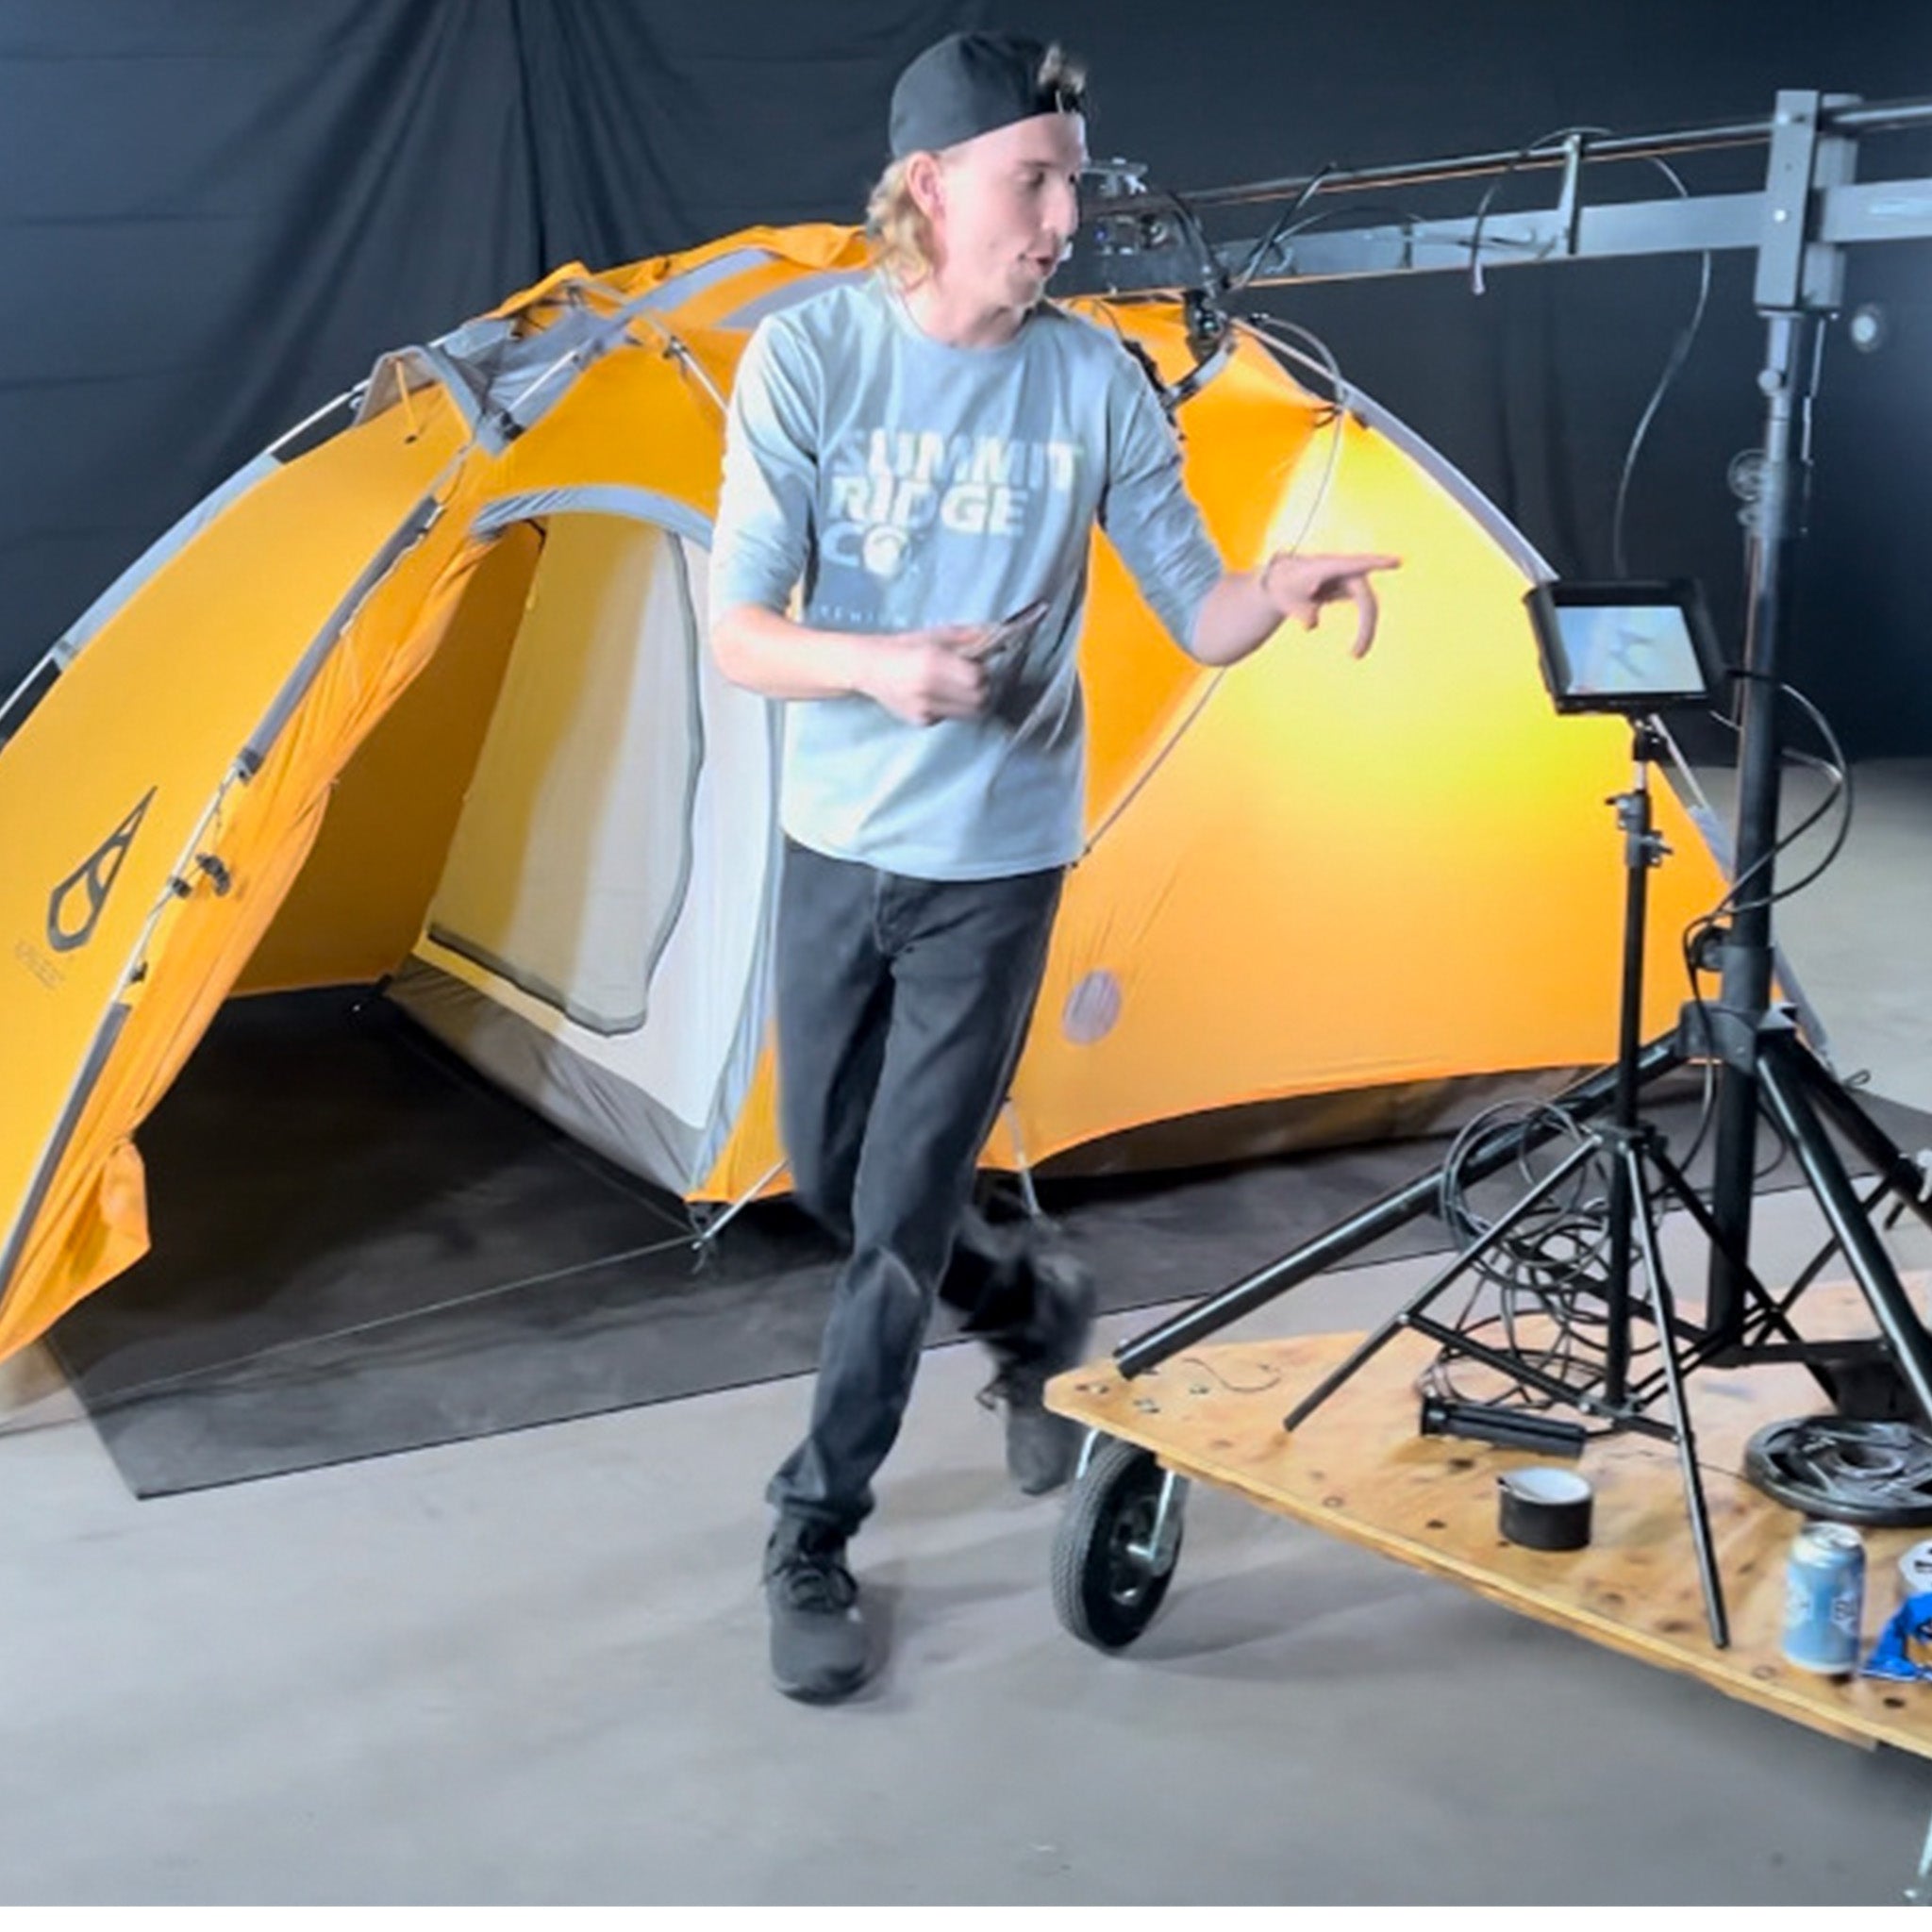 Dragon V1 Alpine Select 2P 4 Season Solar Tent